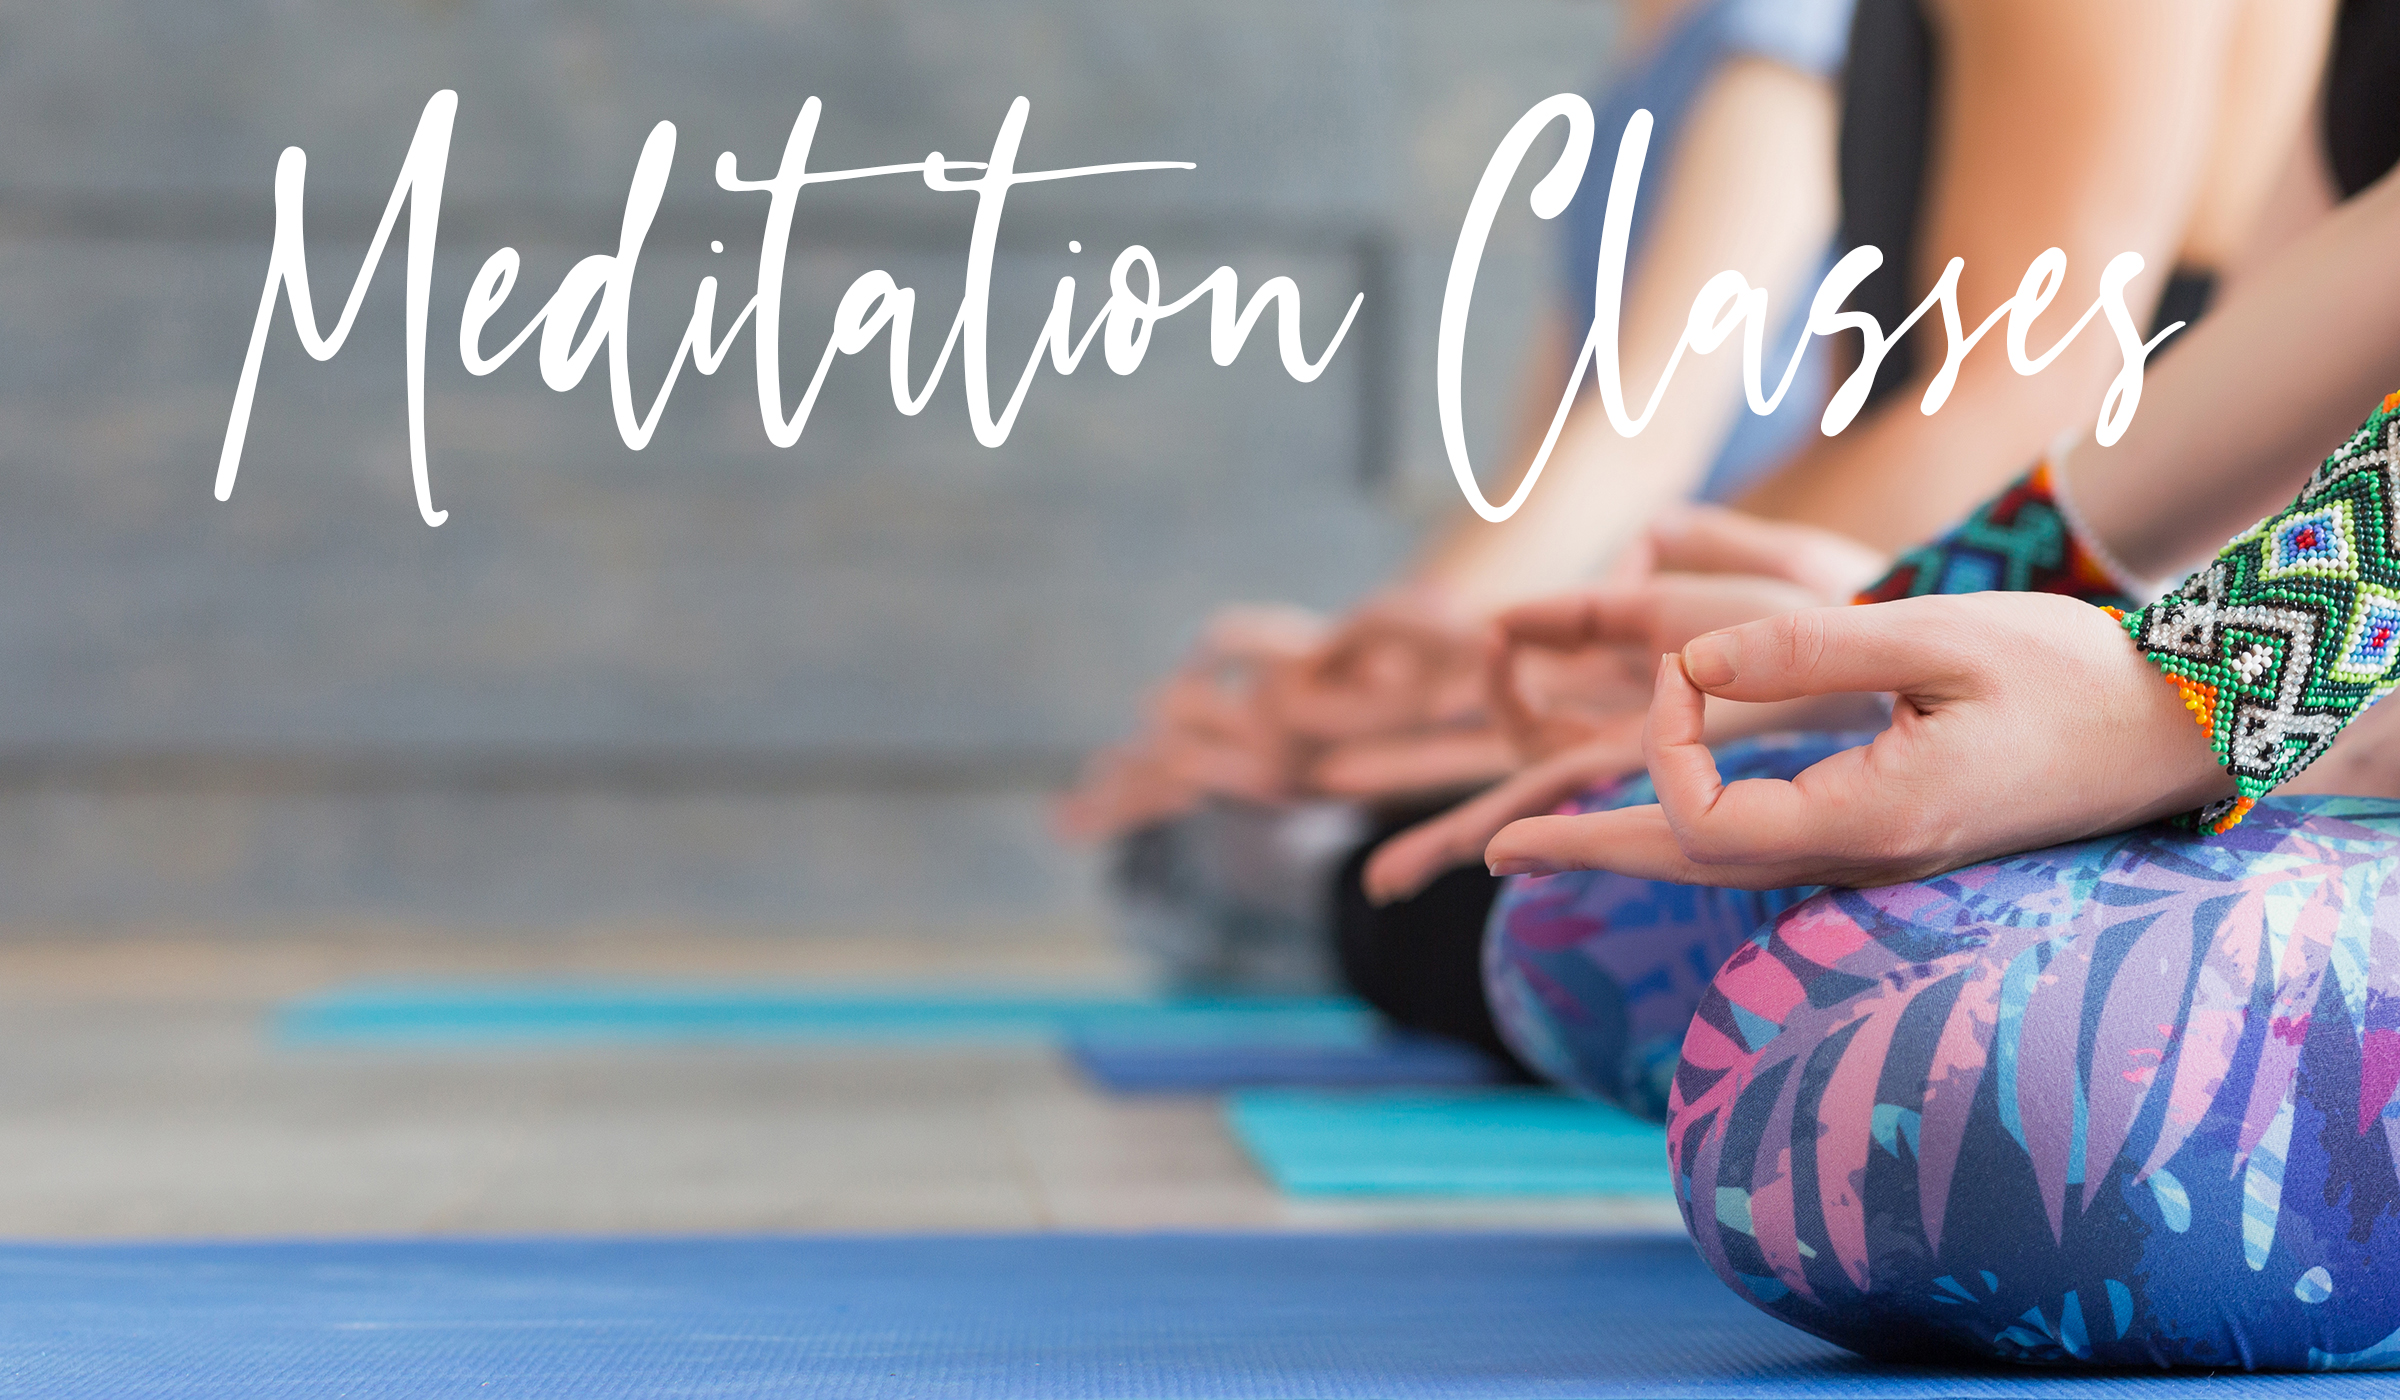 everest fitness meditation classes